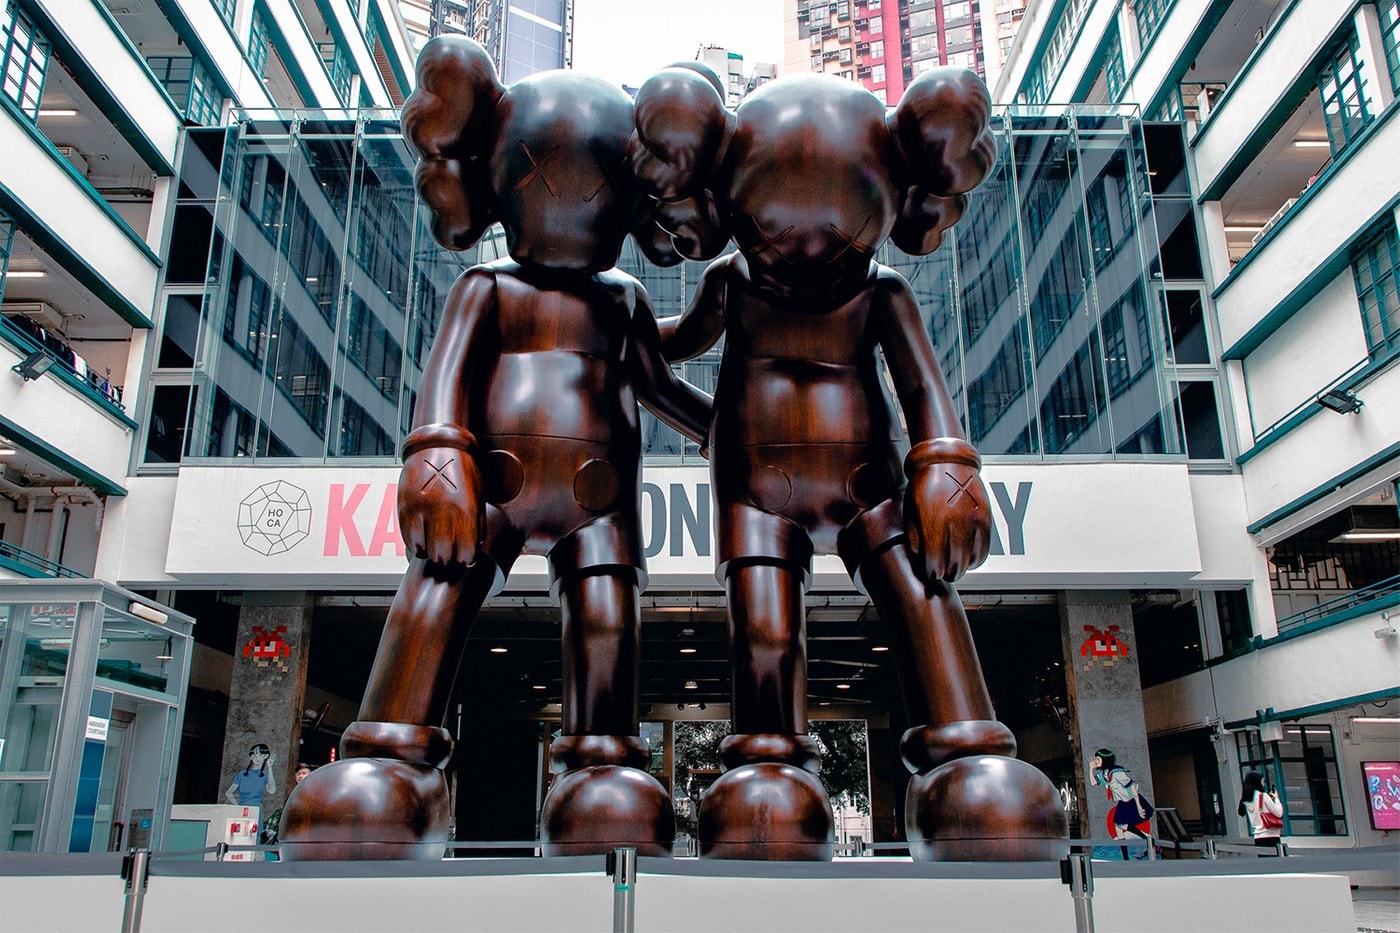 KAWS: ALONG THE WAY Hong Kong Exhibition Companion Sculpture Brown